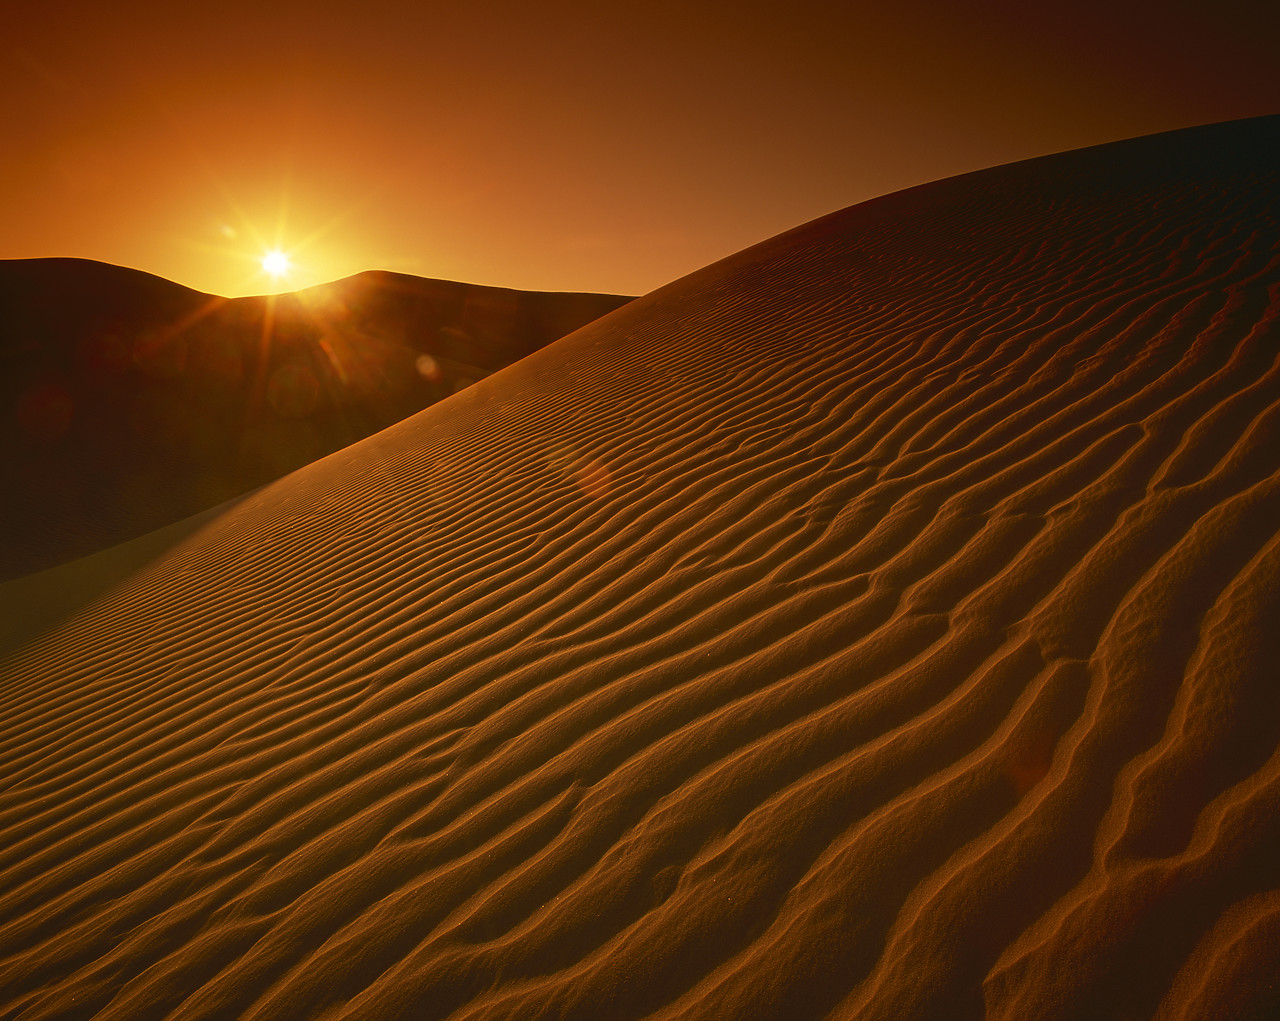 #980505-1 - Sunrise over Sand Dunes, Algodones Dunes Wilderness Area, California, USA